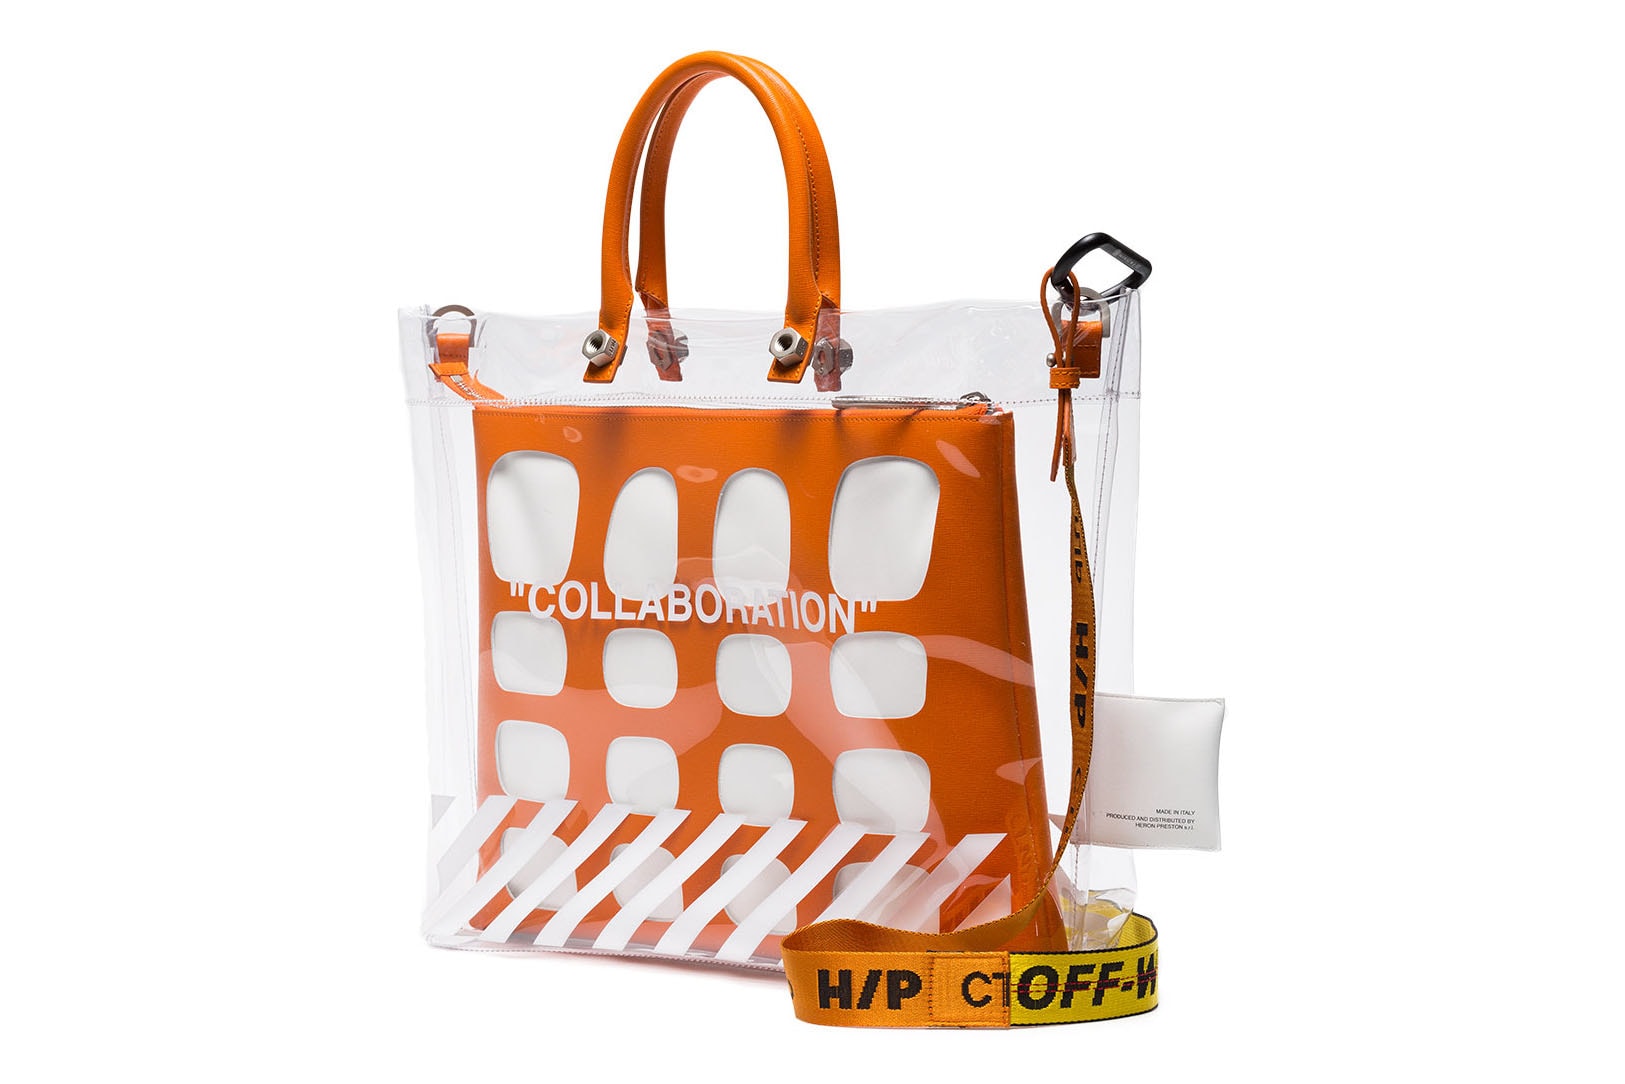 Heron Preston Off-White™ COLLABORATION off white virgil abloh handbag bags orange pvc where to buy